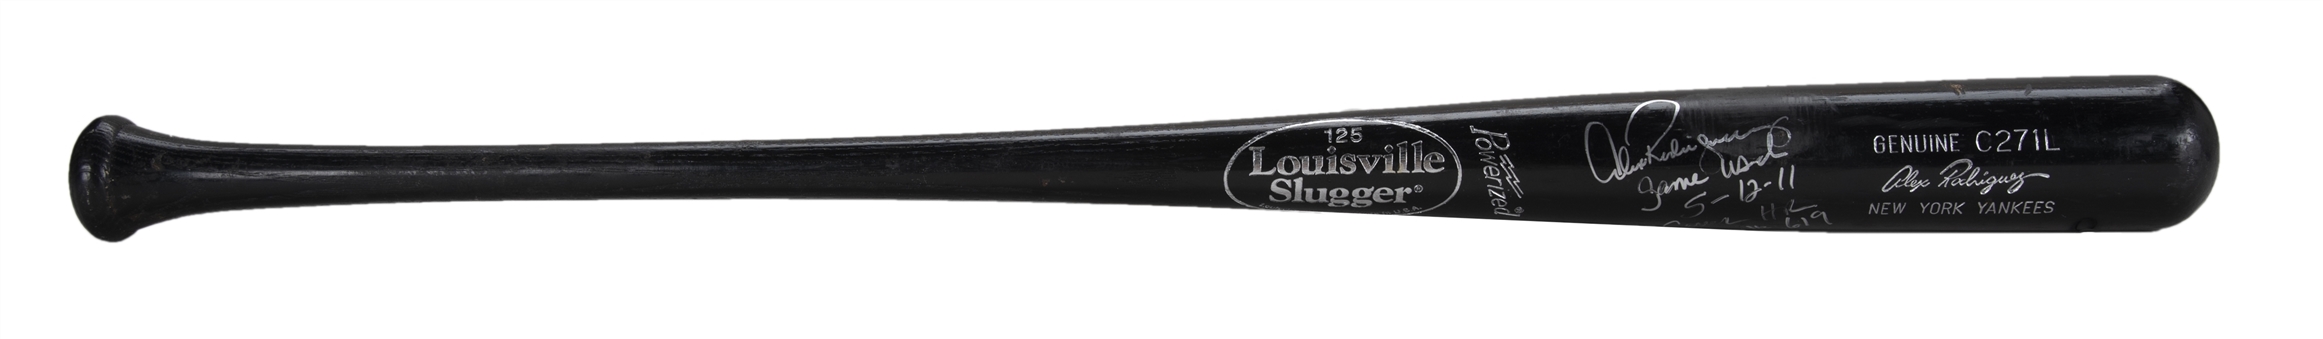 2011 Alex Rodriguez Game Used & Signed Louisville Slugger C271L Model Bat Used For Career Home Run #619 (Rodriguez LOA)